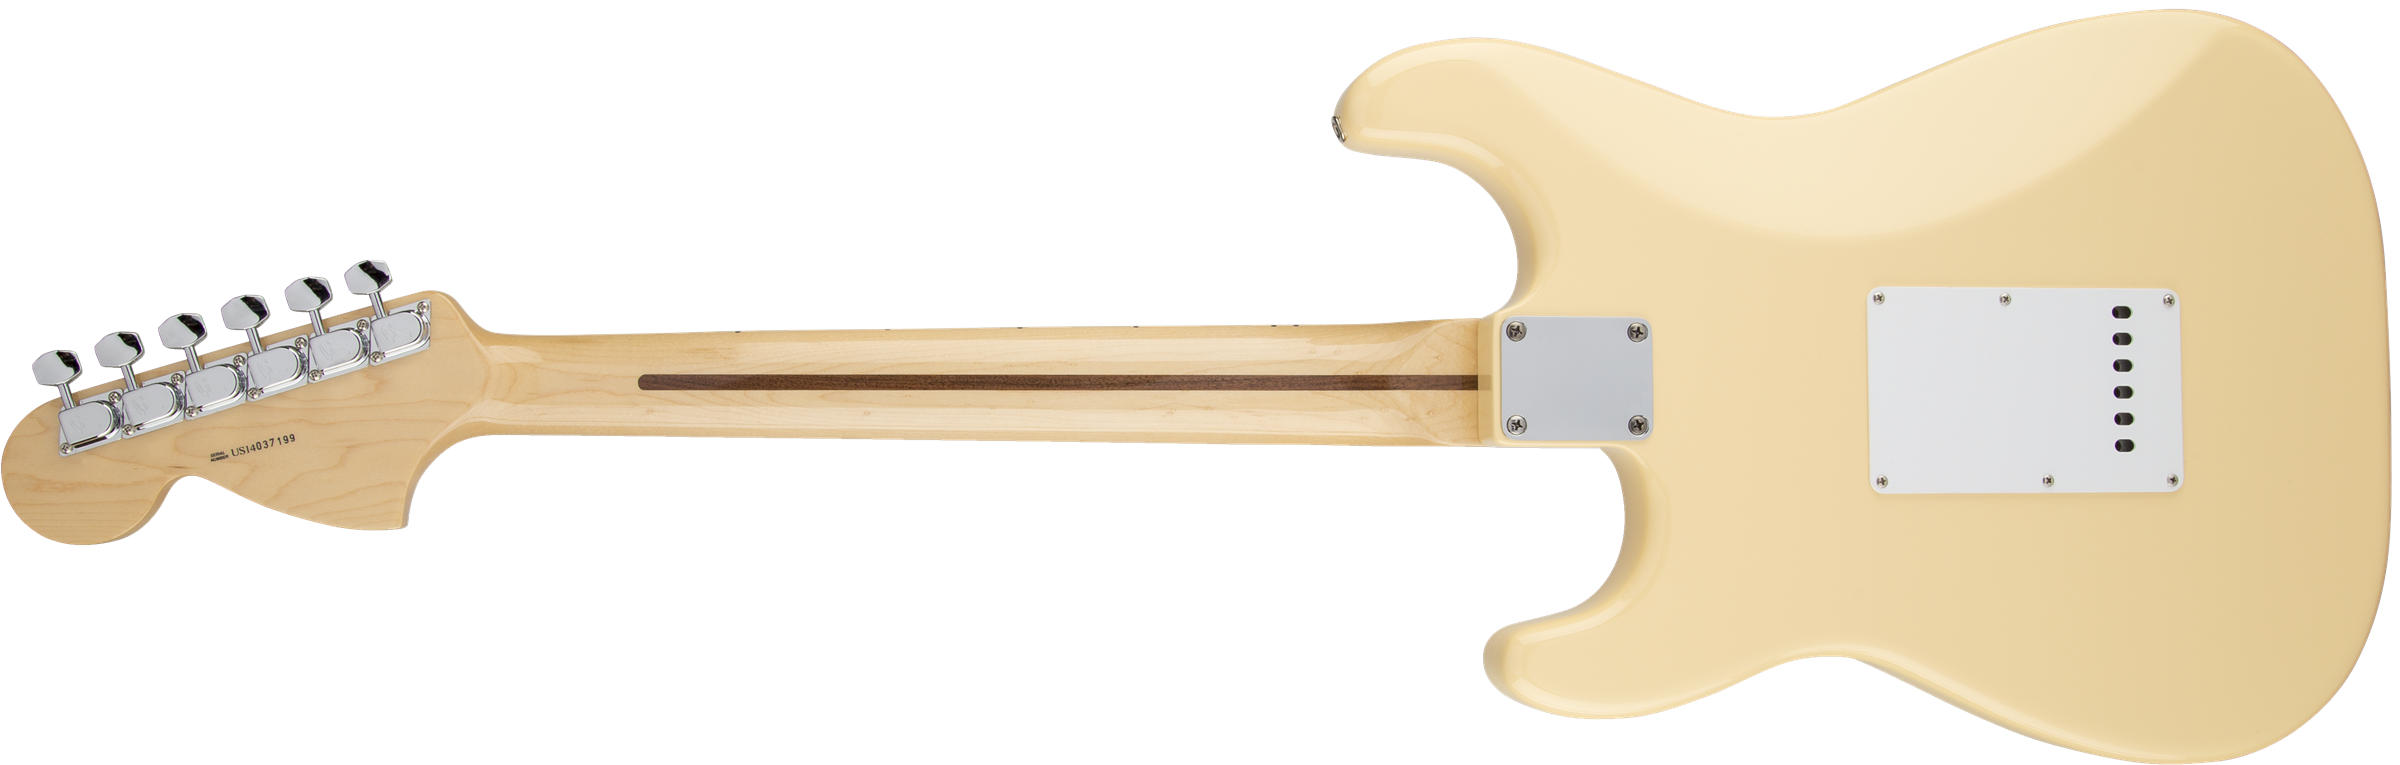 Yngwie Malmsteen Stratocaster Scalloped Maple Fingerboard, Vintage White背面画像